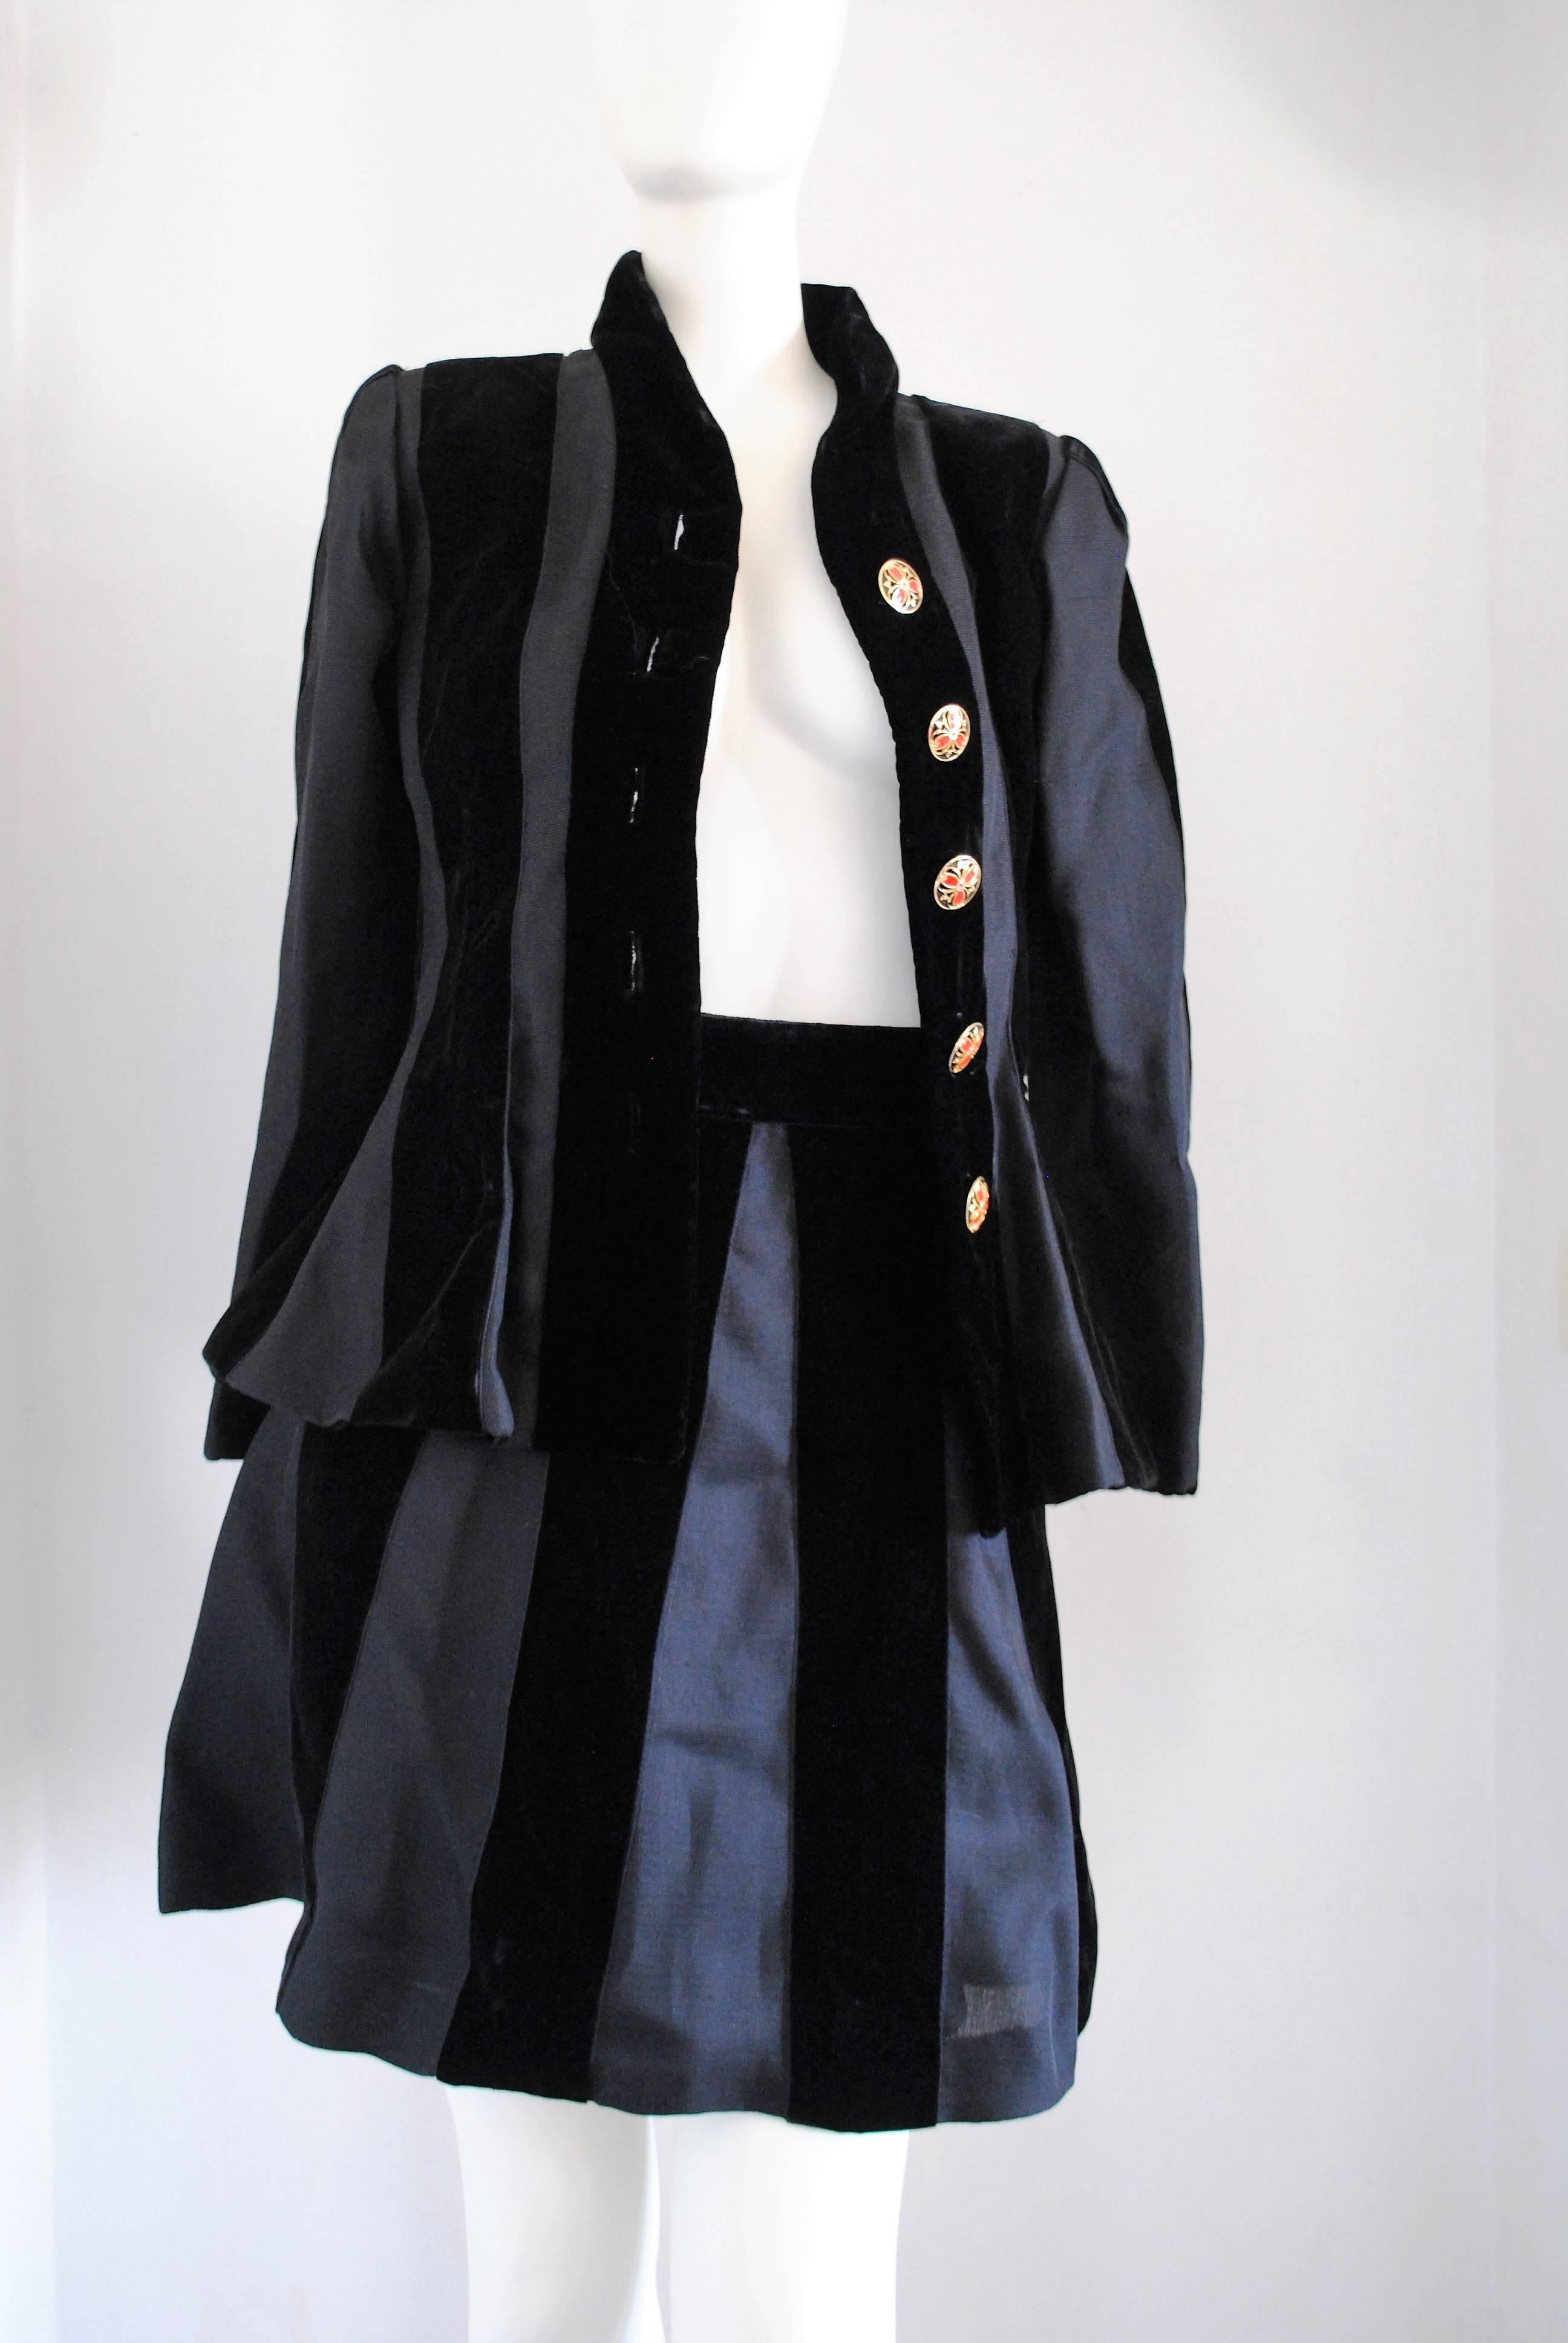 Yves Saint Laurent Rive Gauche Skirt Suit
Black silk and velvet skirt suit
Totally made in france in french size 38
